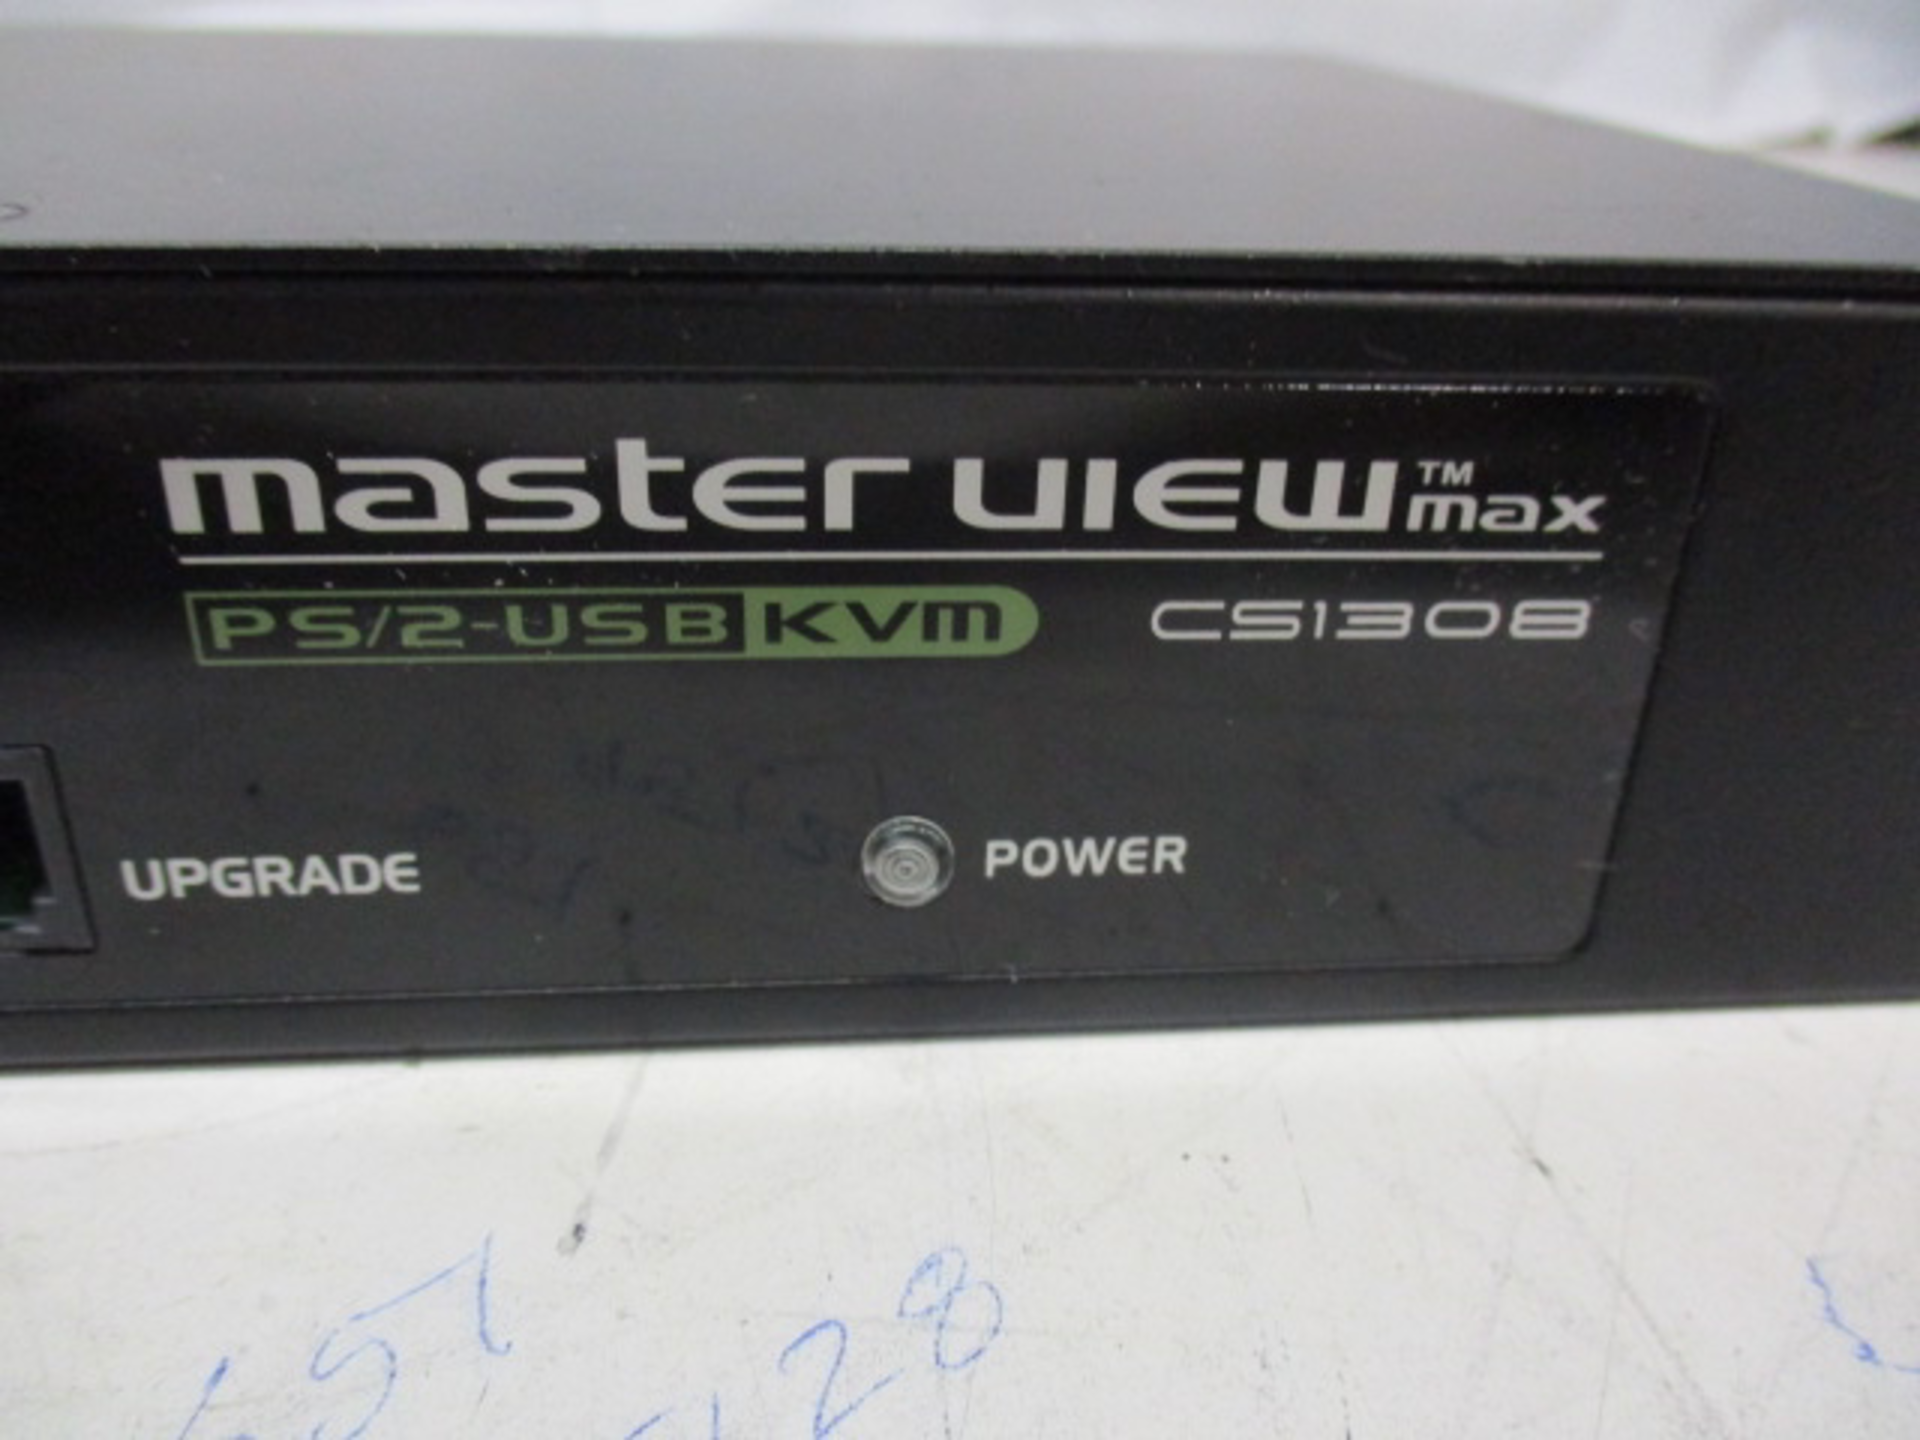 ATEN Master View MAX PS/2 USB KVMP CS1708i Rackmount KvM Switch - Image 3 of 3